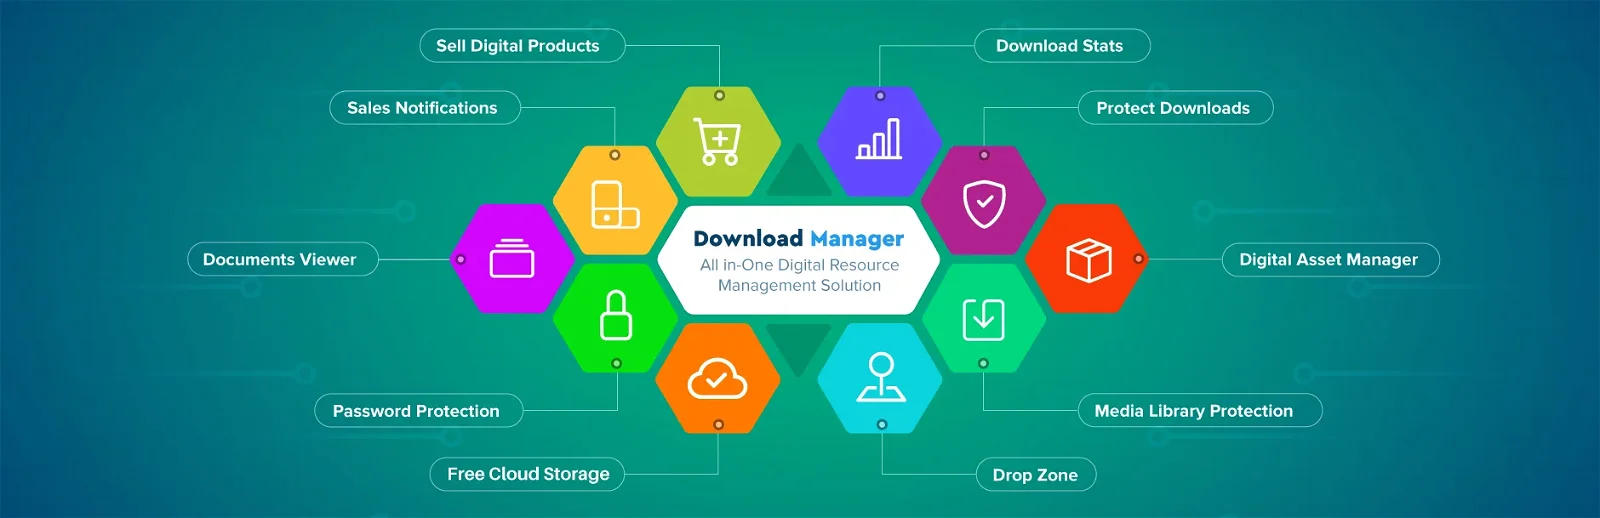 download-manager-banner